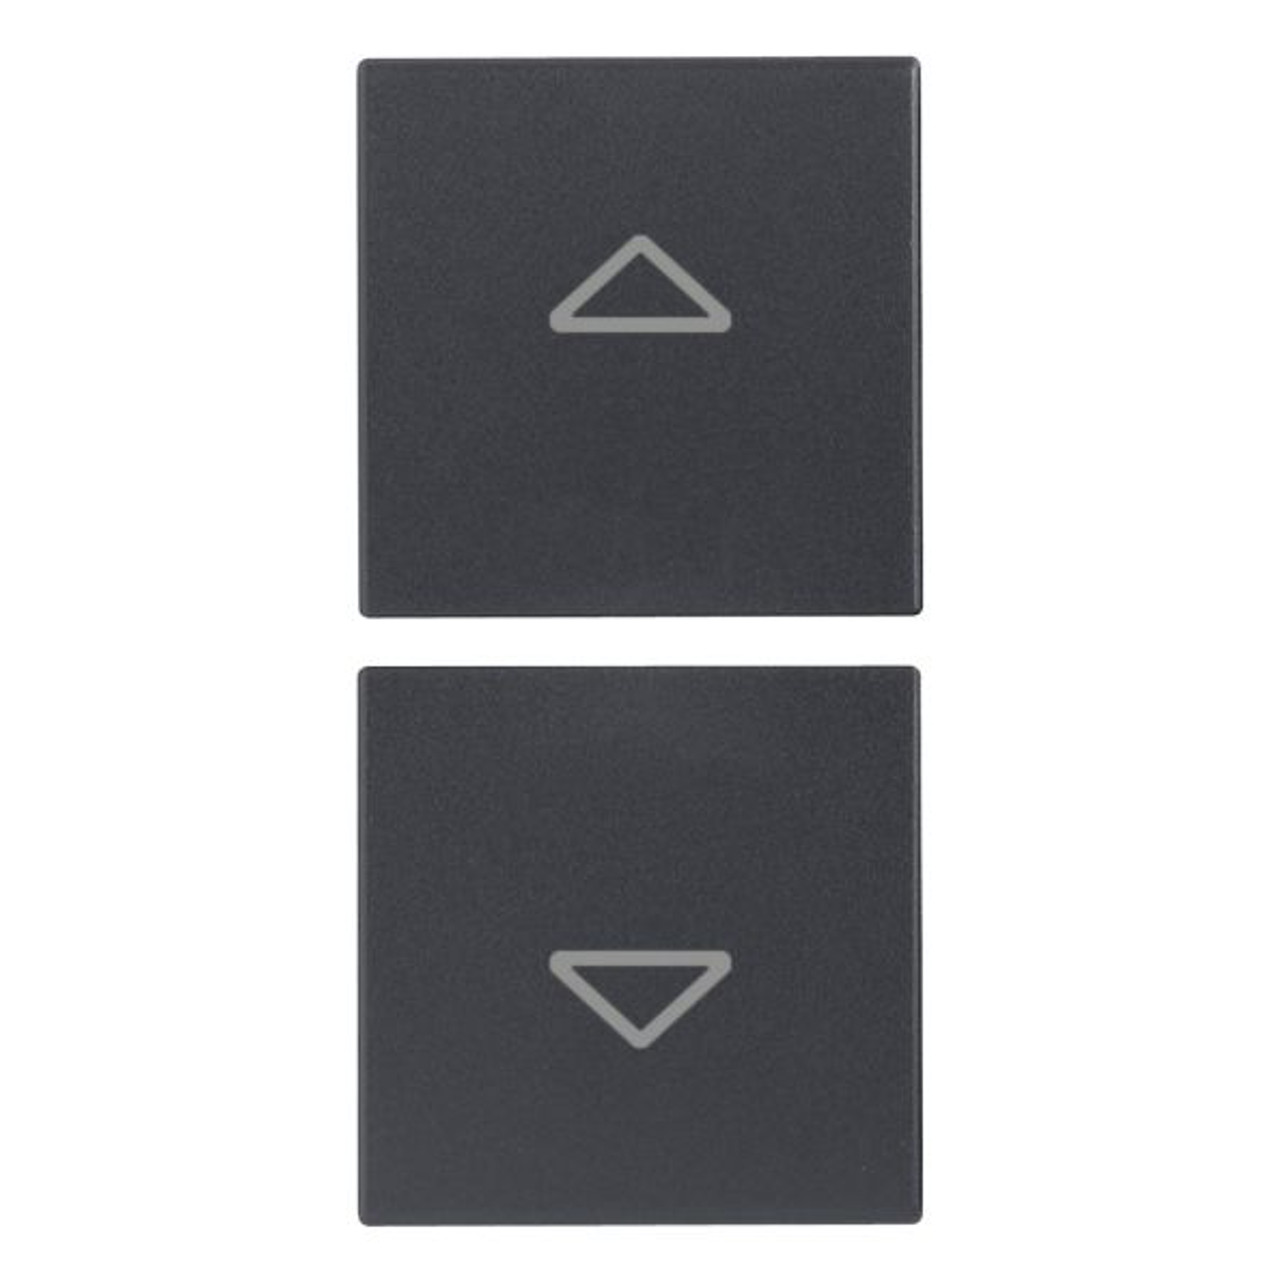 Vimar - Eikon 20751.2 2 Half Rocker Button - Interchangeable, Directional Arrows Symbol, 1 Module - Apollo Lighting